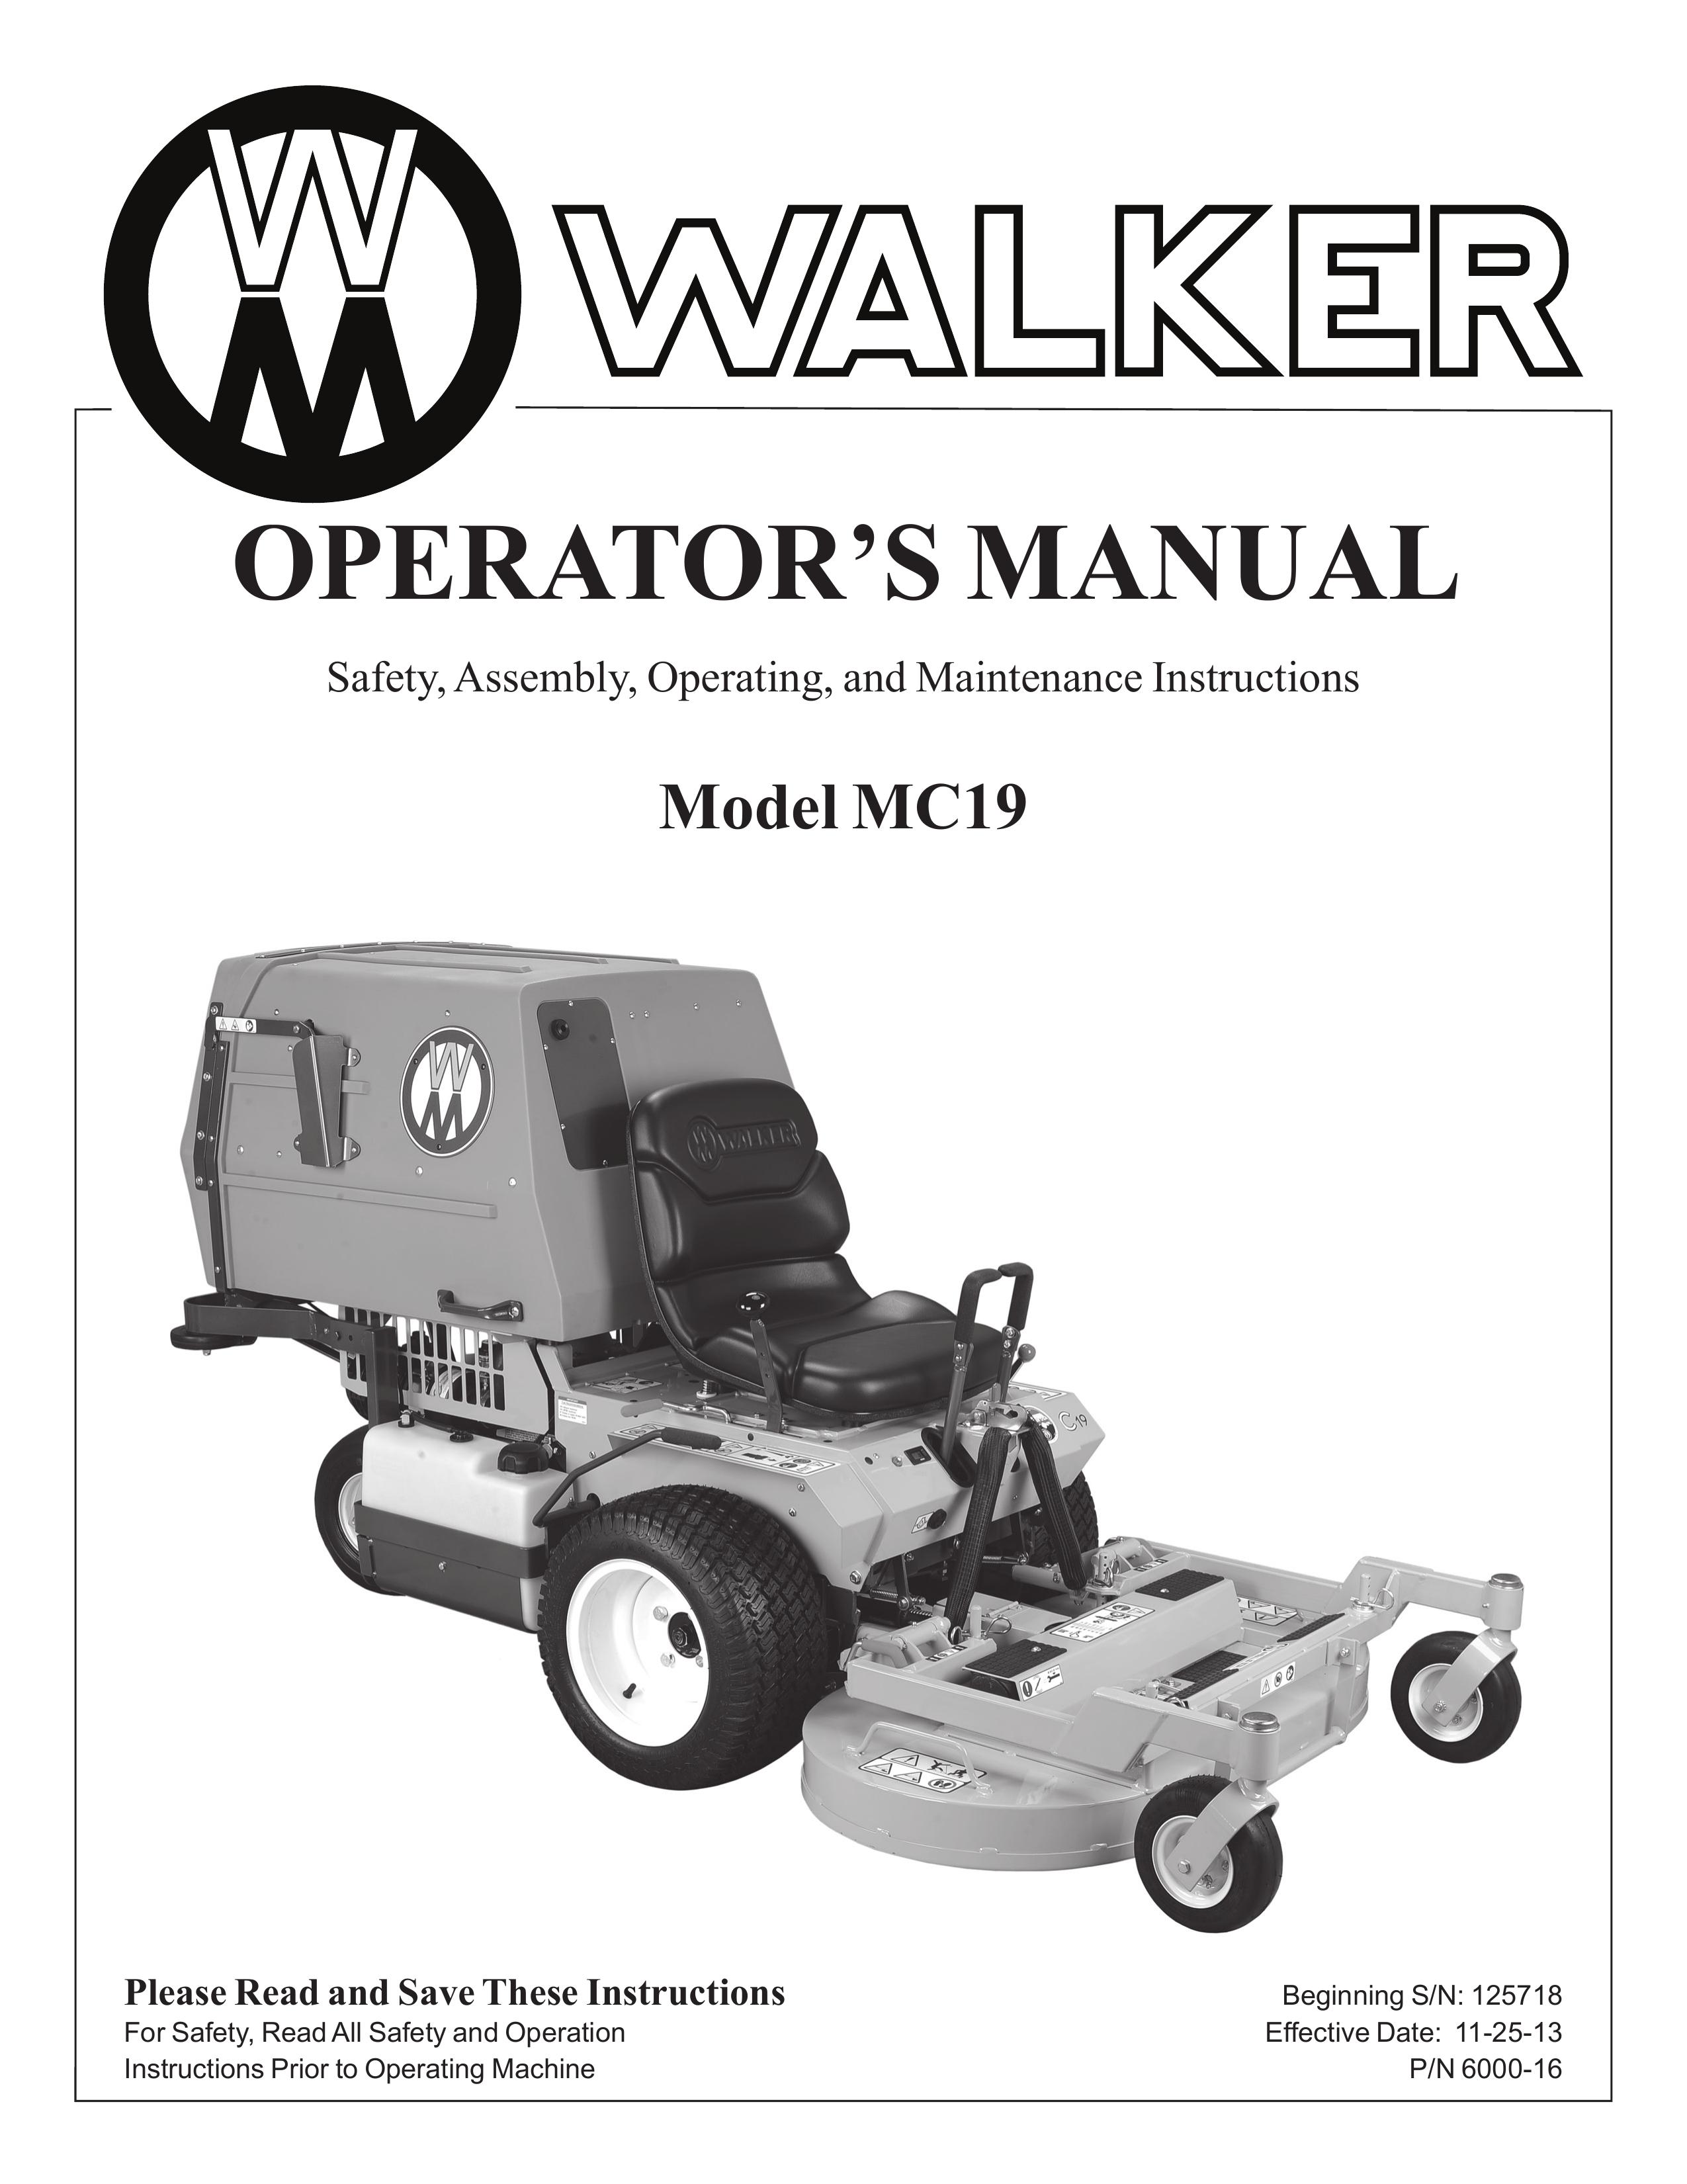 Walker MC19 Lawn Mower User Manual